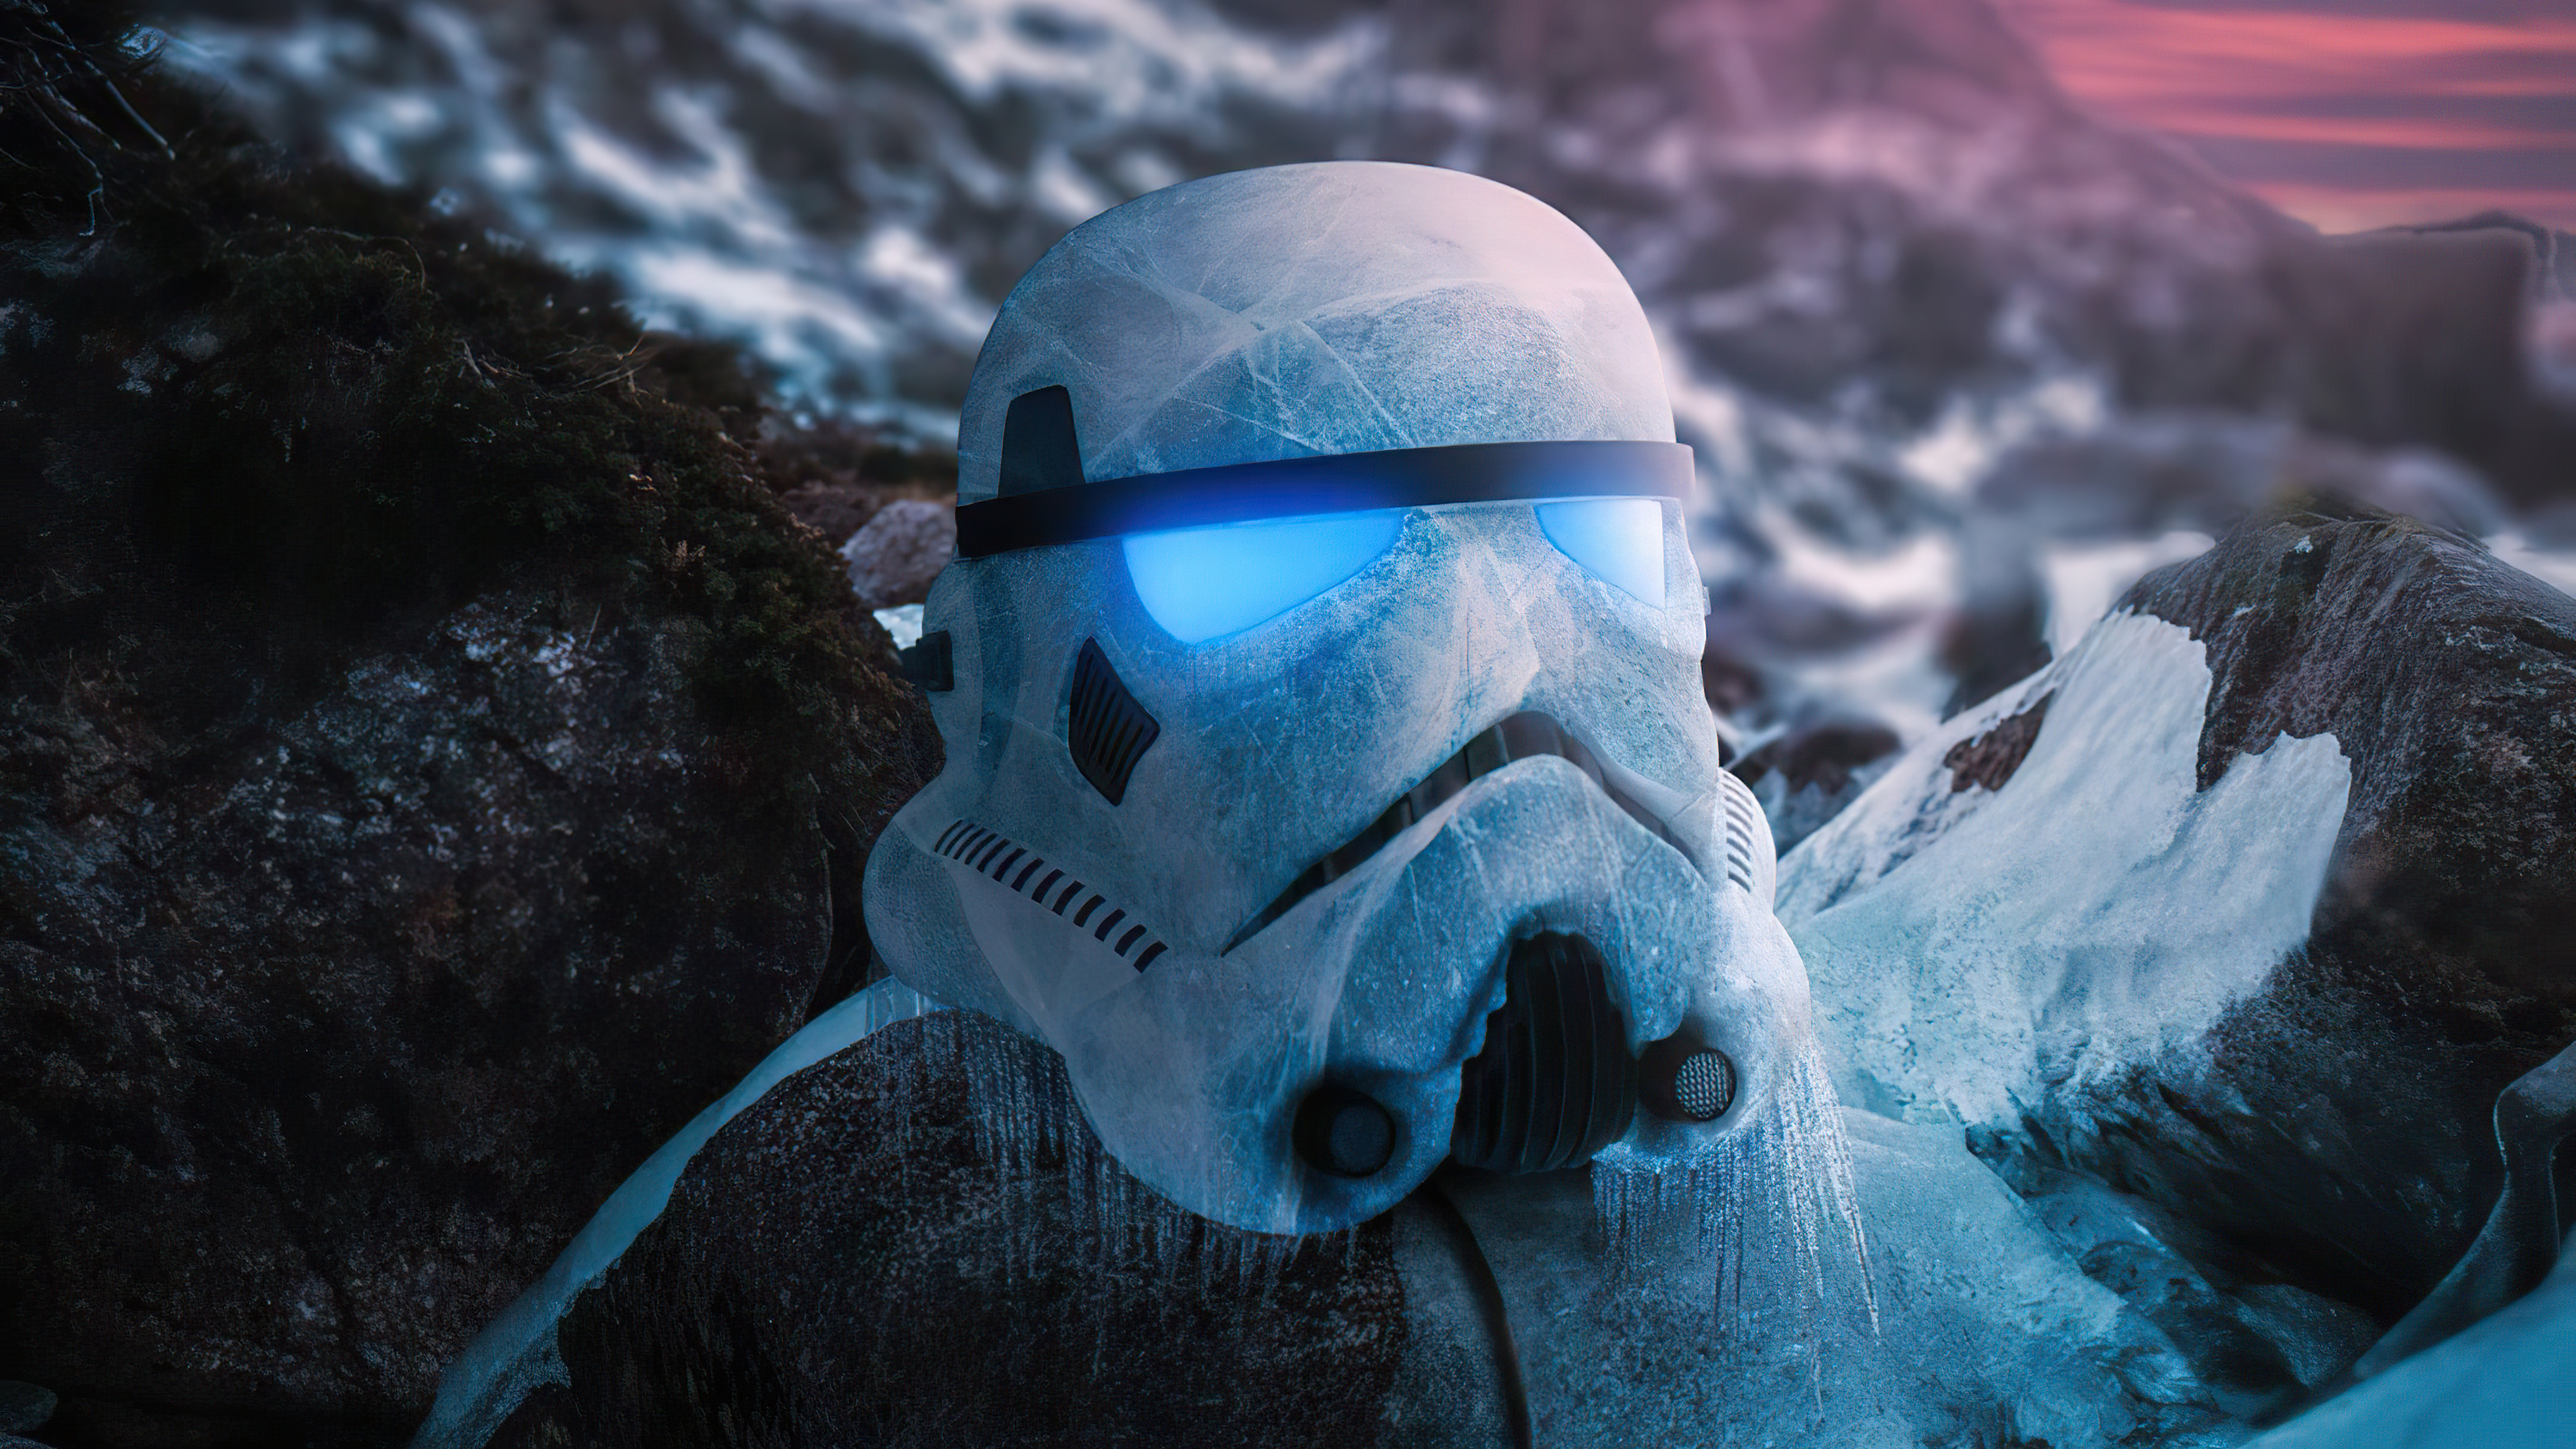 star wars wallpaper clone trooper